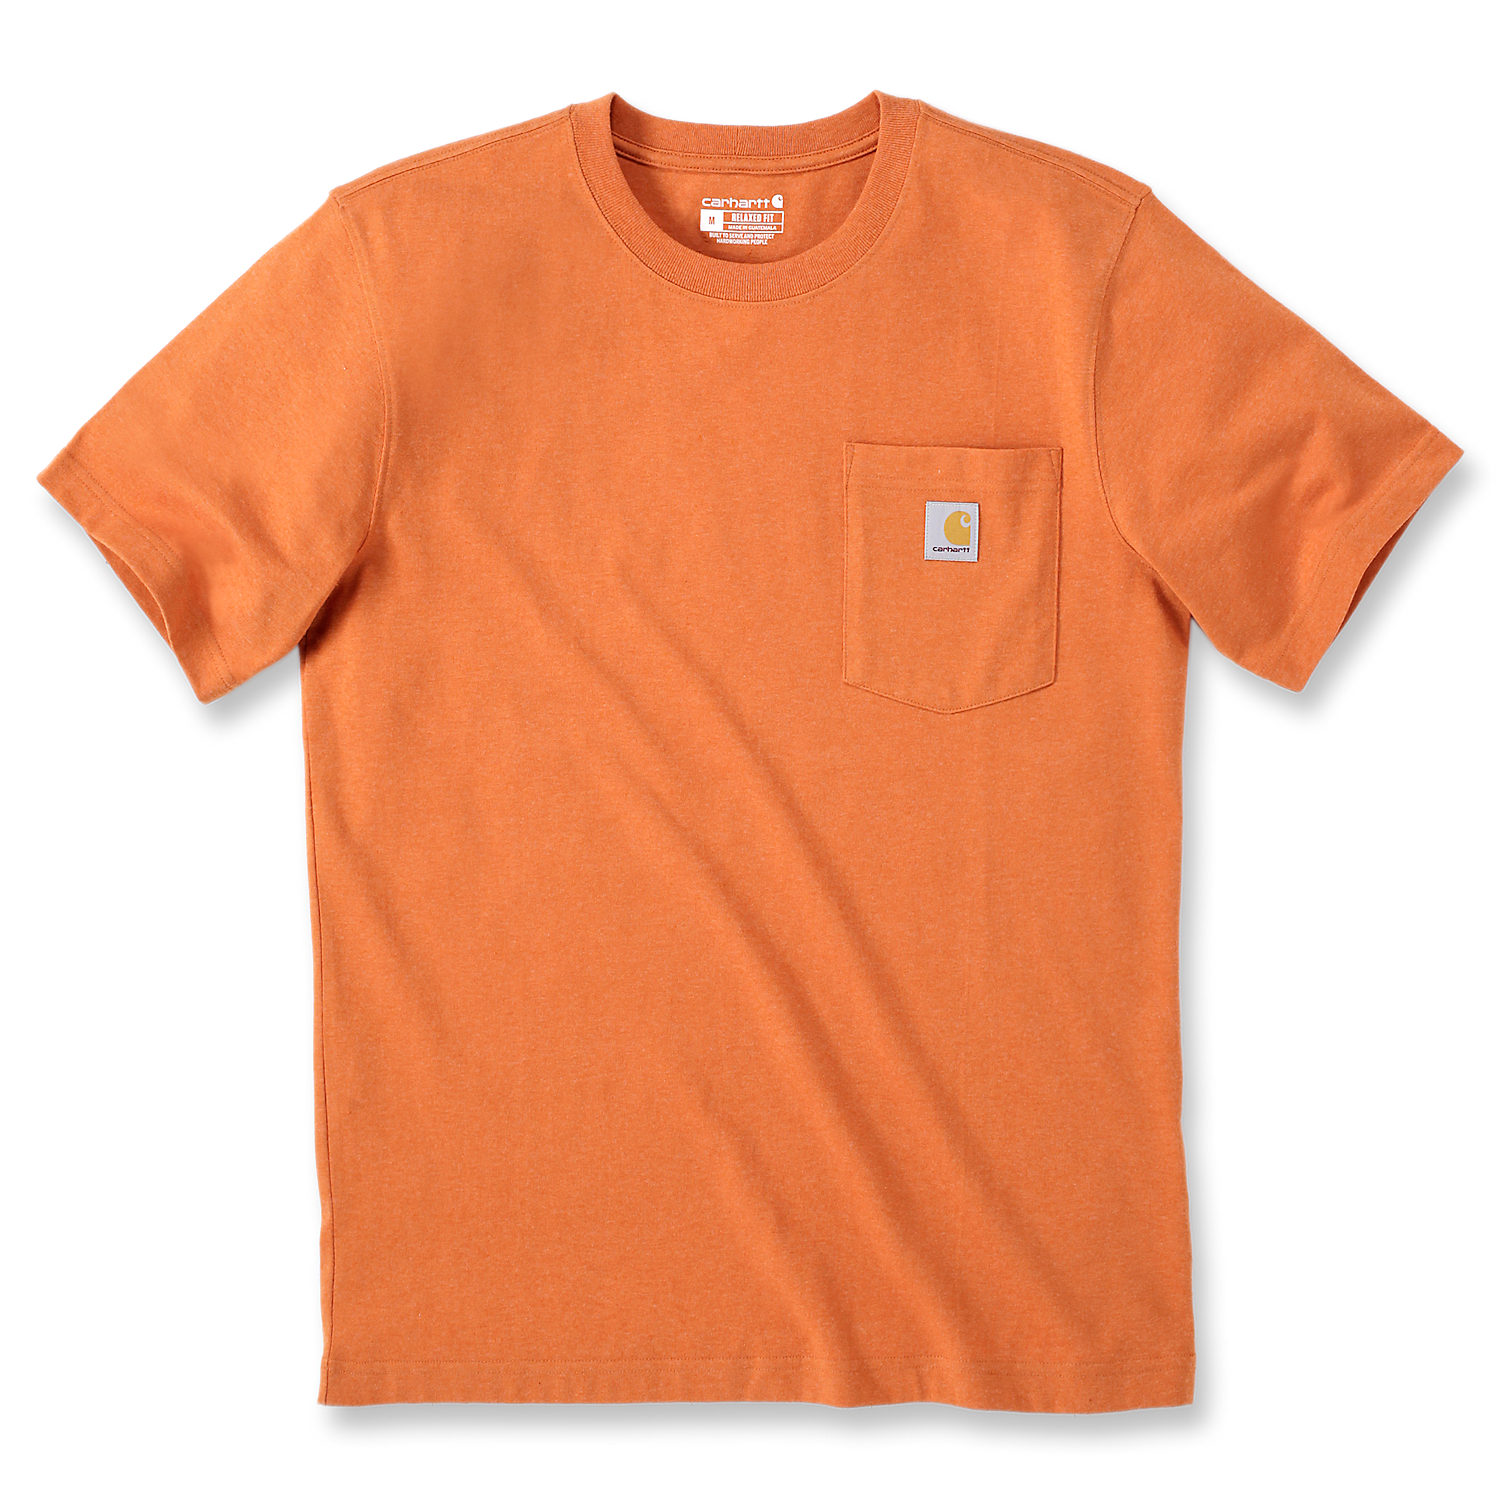 Carhartt Herren T-Shirt K87 Short-Sleeve Pocket, Marmalade